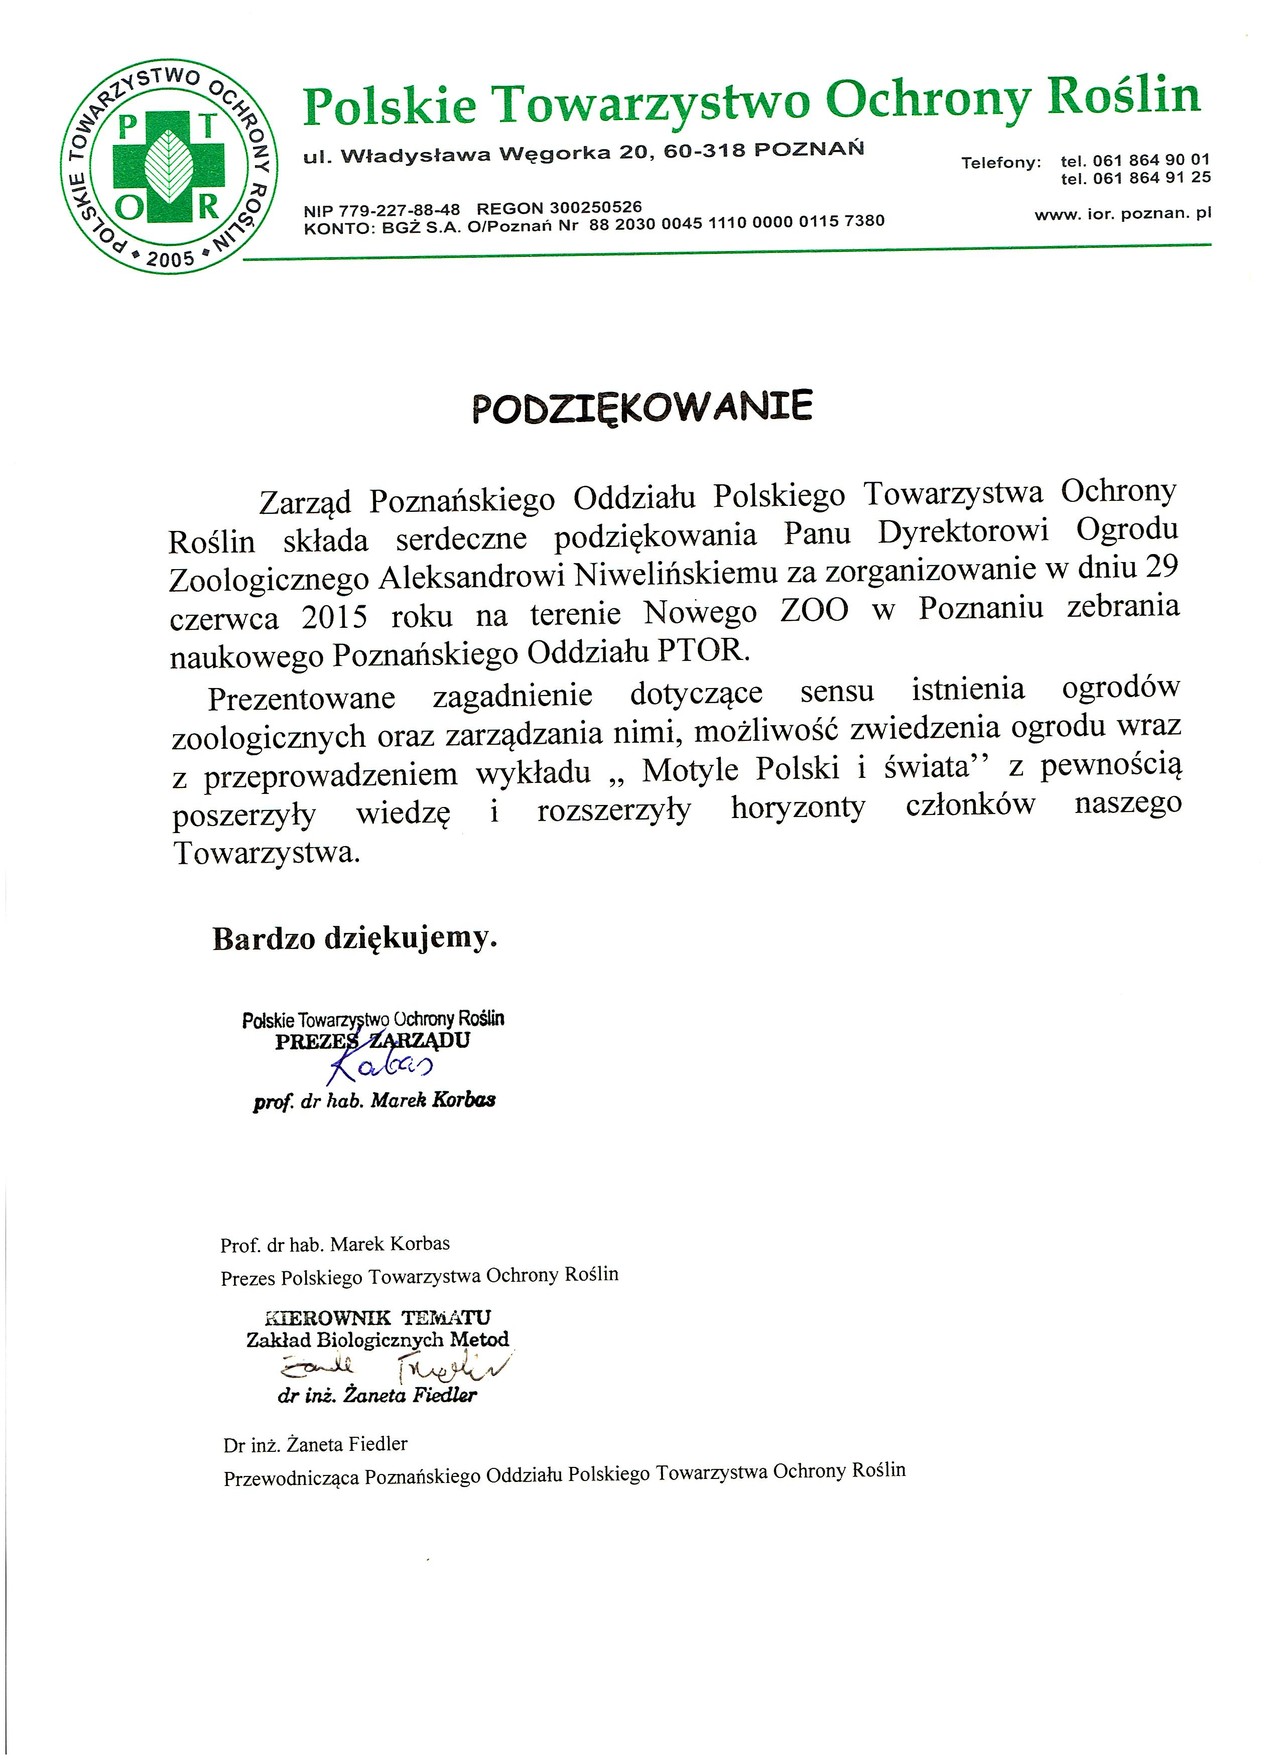 Acknowledgements Aleksander Niweliński - Polish Society of Plant Protection